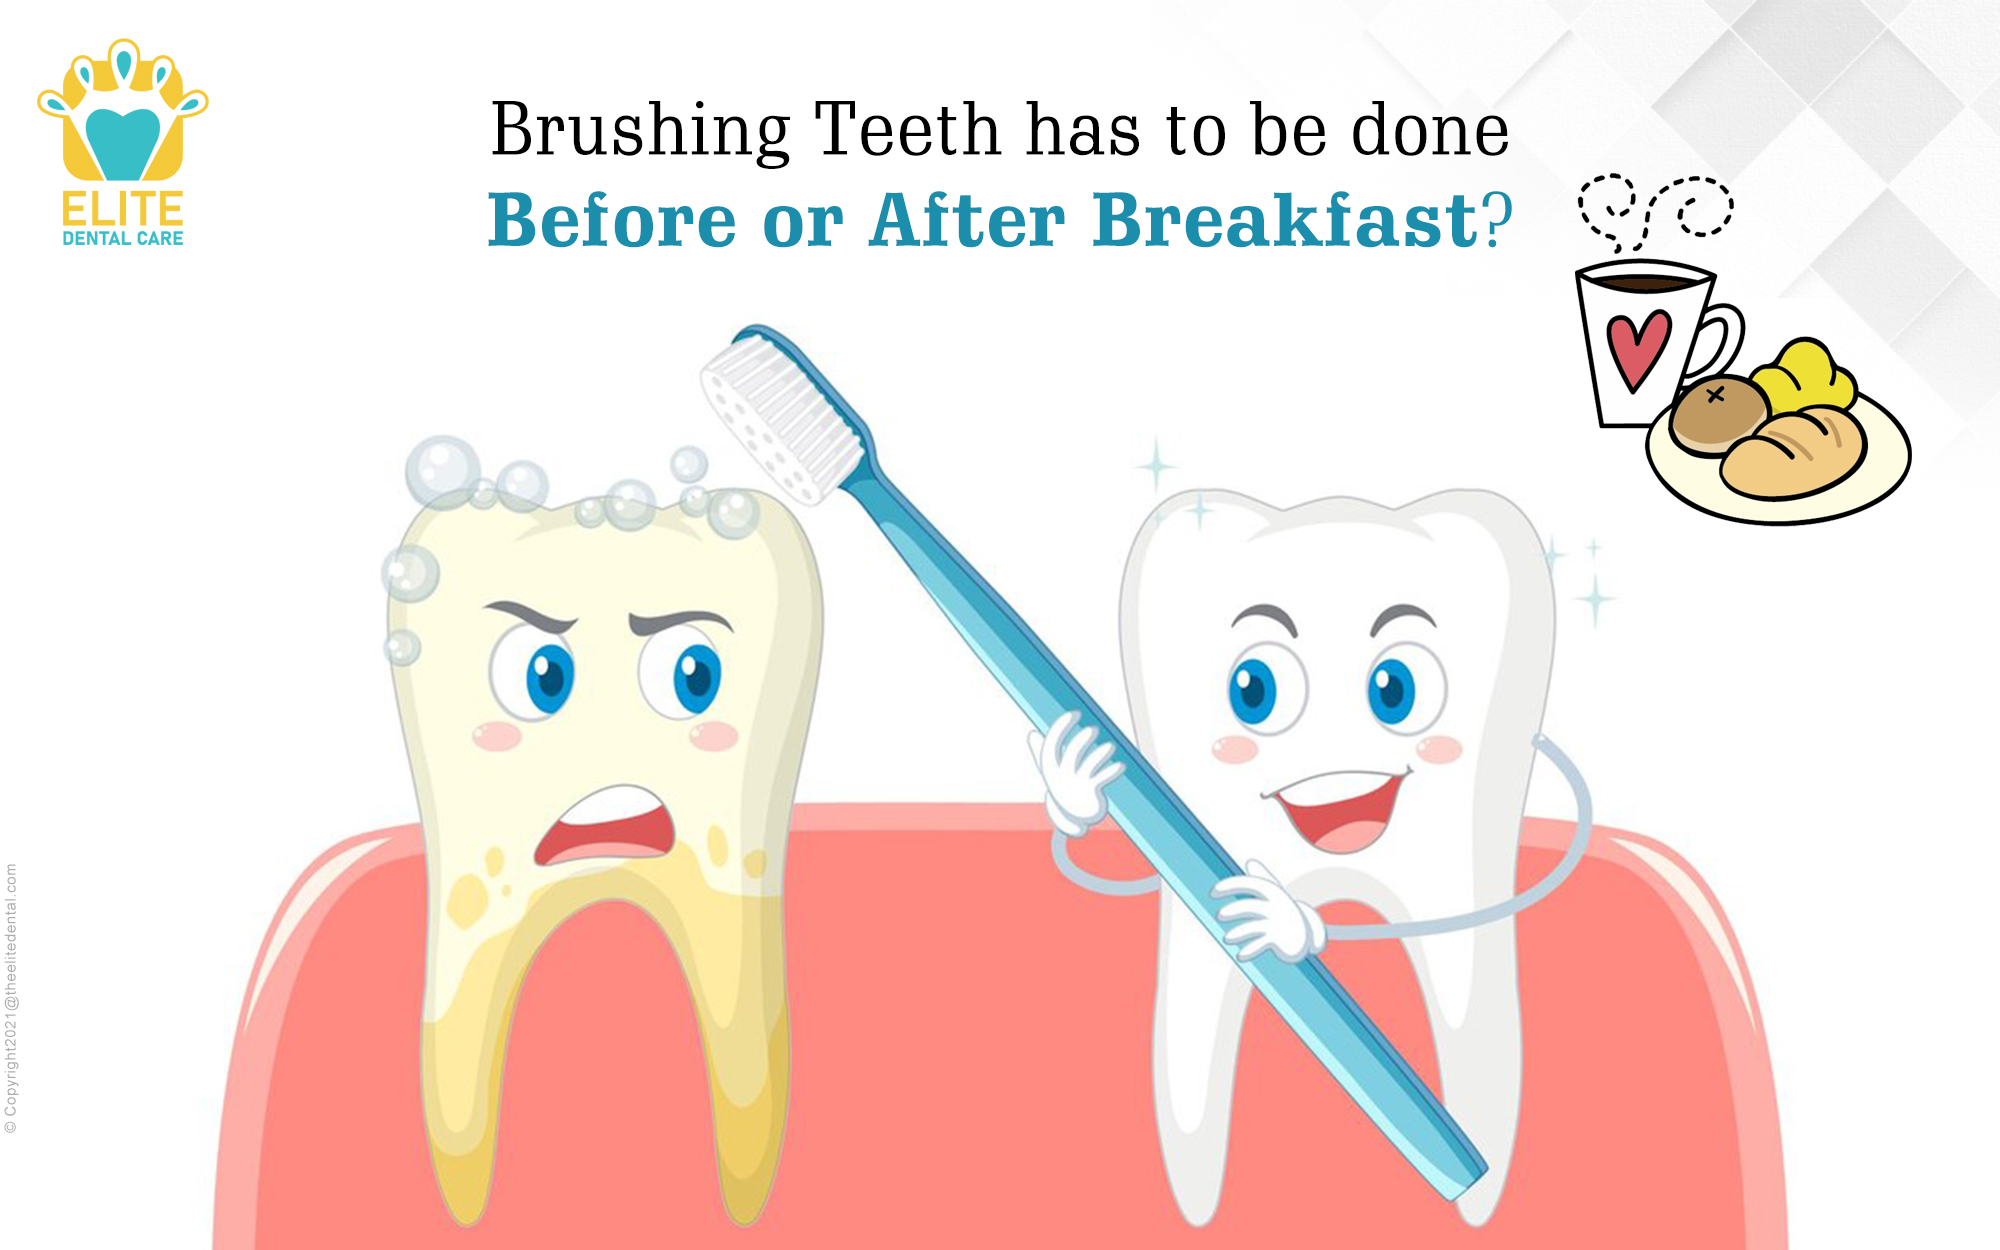 Should I brush my teeth before or after Breakfast? - Elite Dental Care